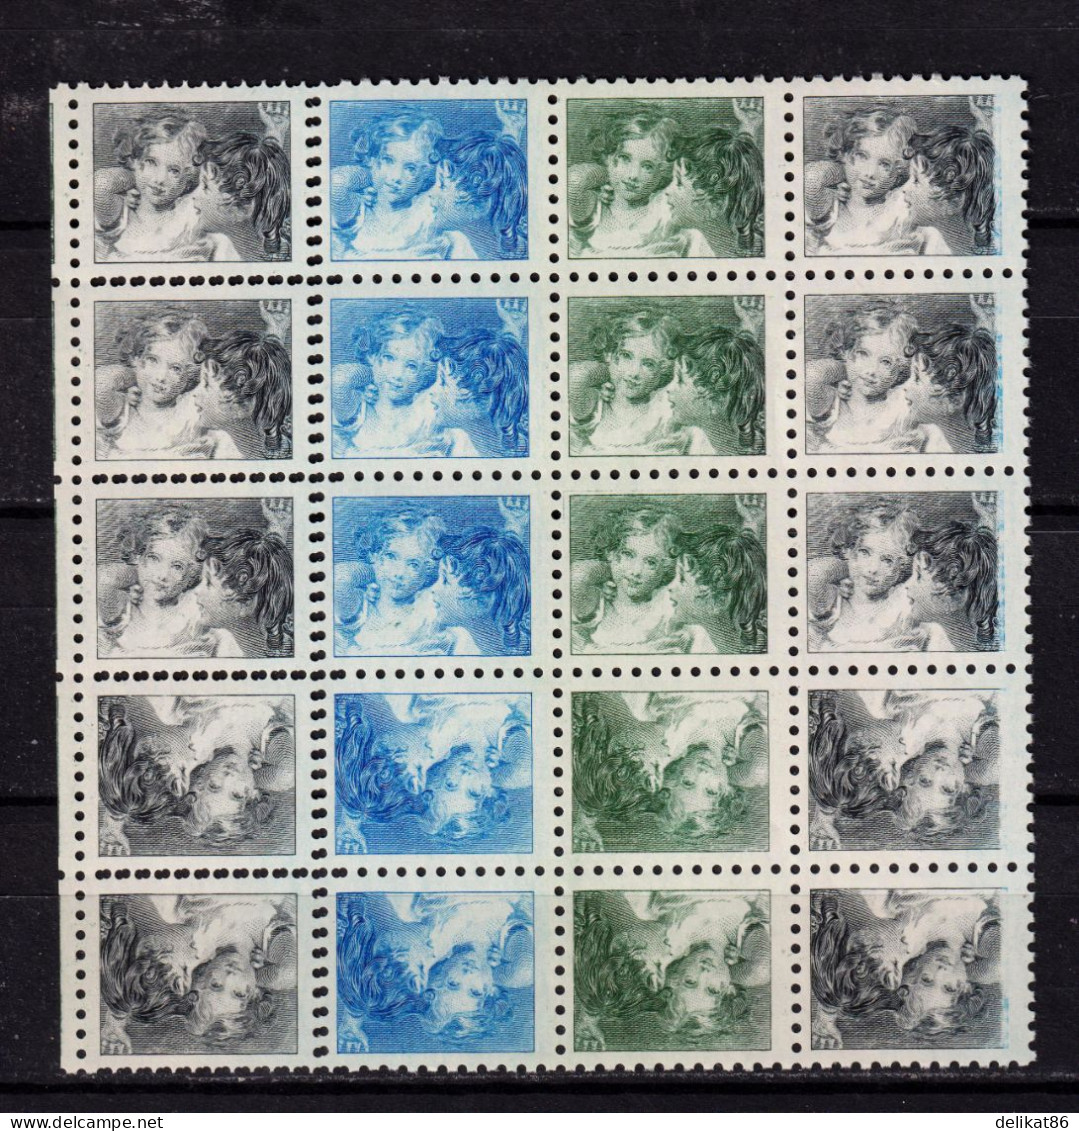 Probedruck Test Stamp Maschinprobe Specimen Canada 1935 Baby Sister - Proeven & Herdruk